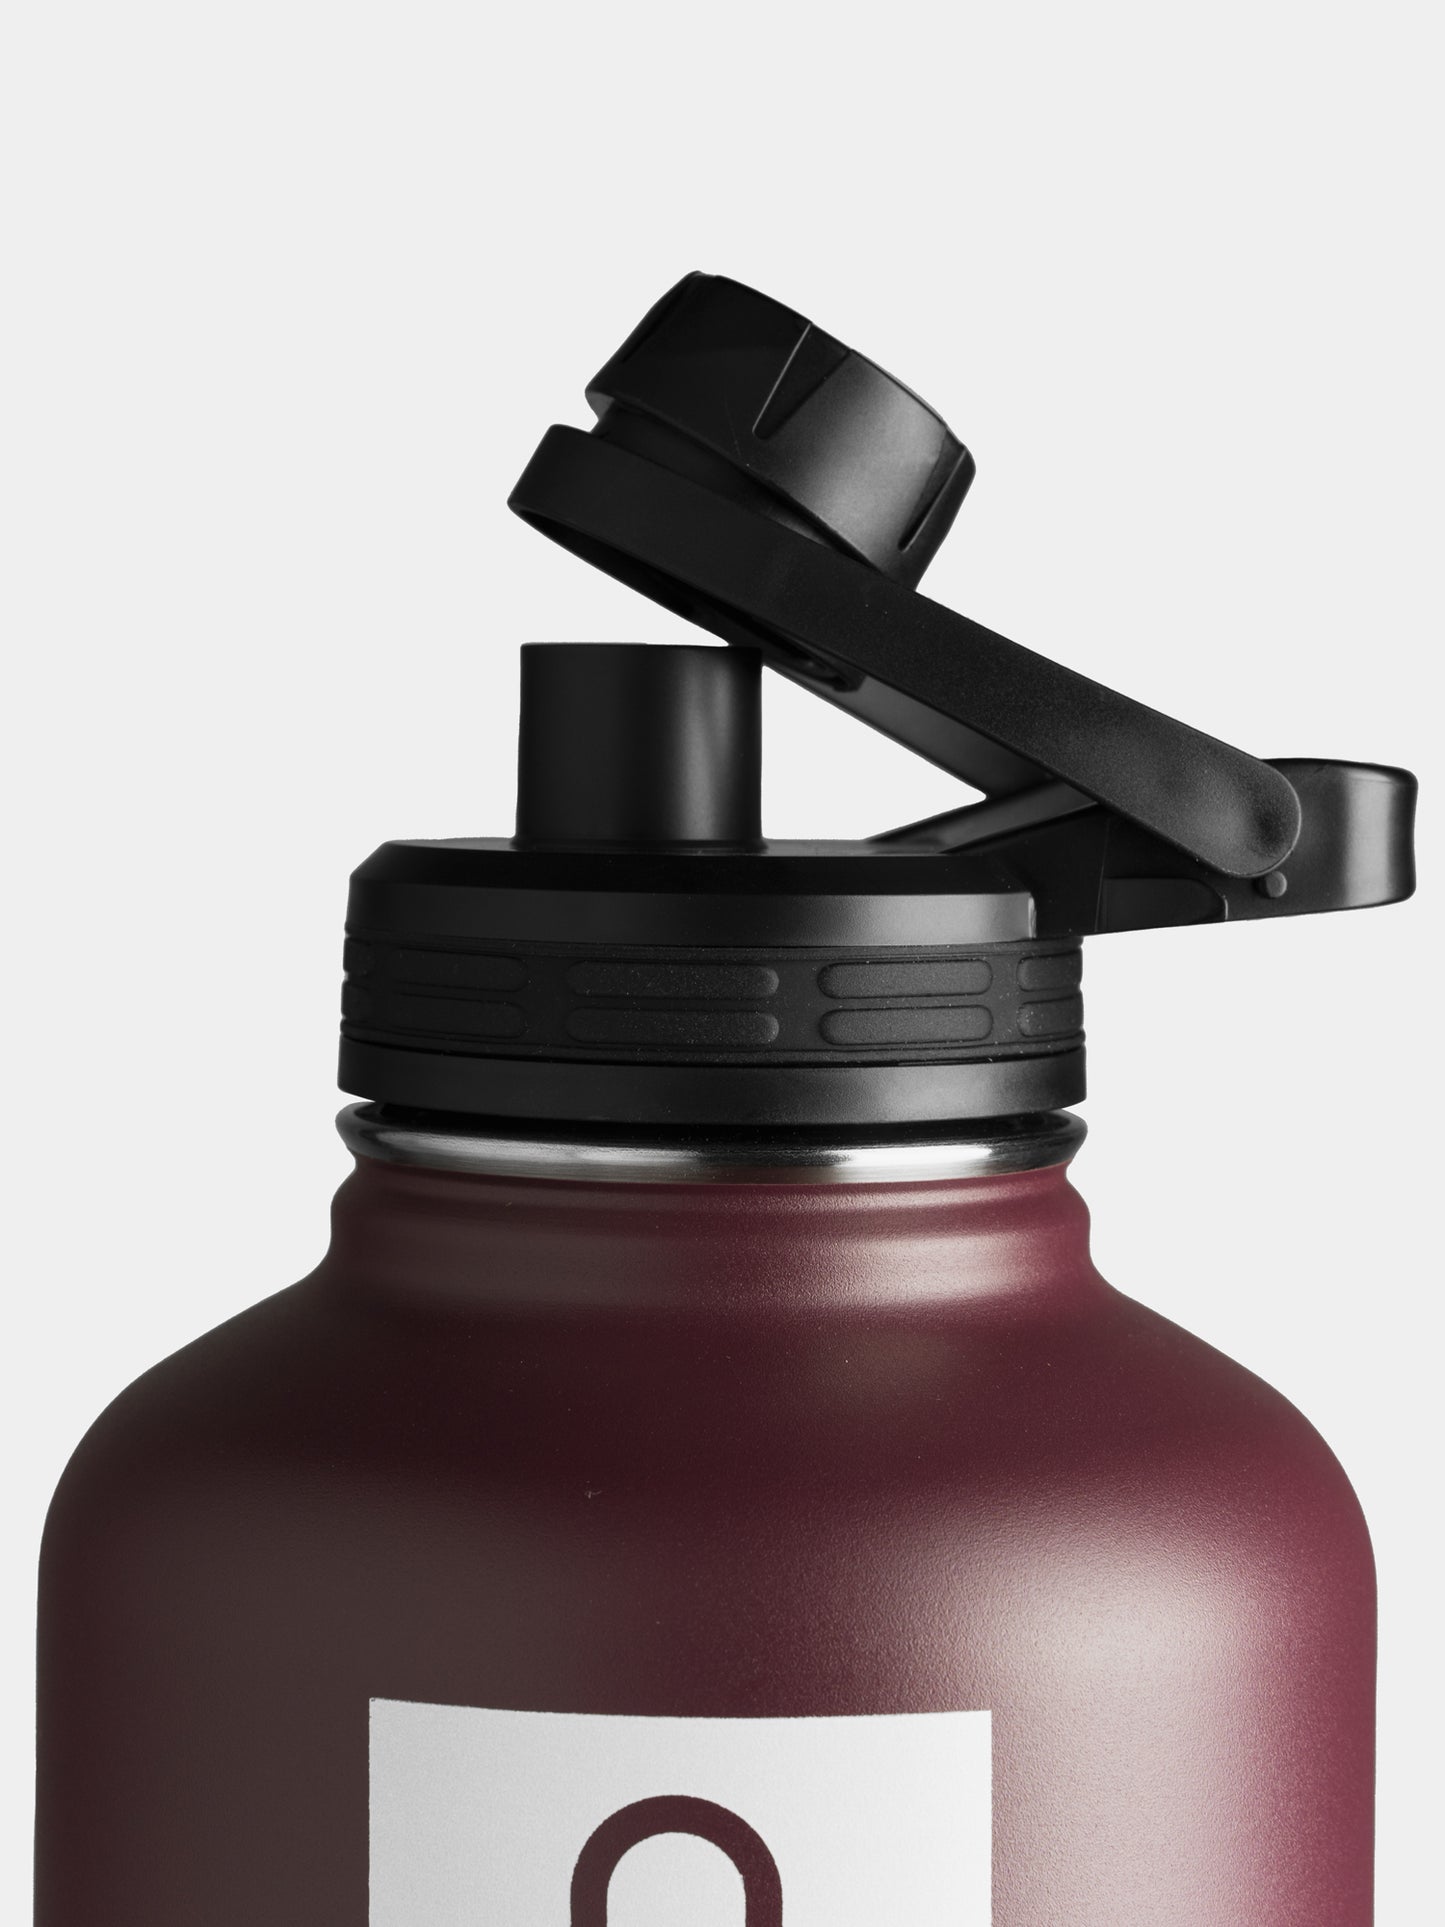 64 oz Summit Water Bottle - Simple Modern. 